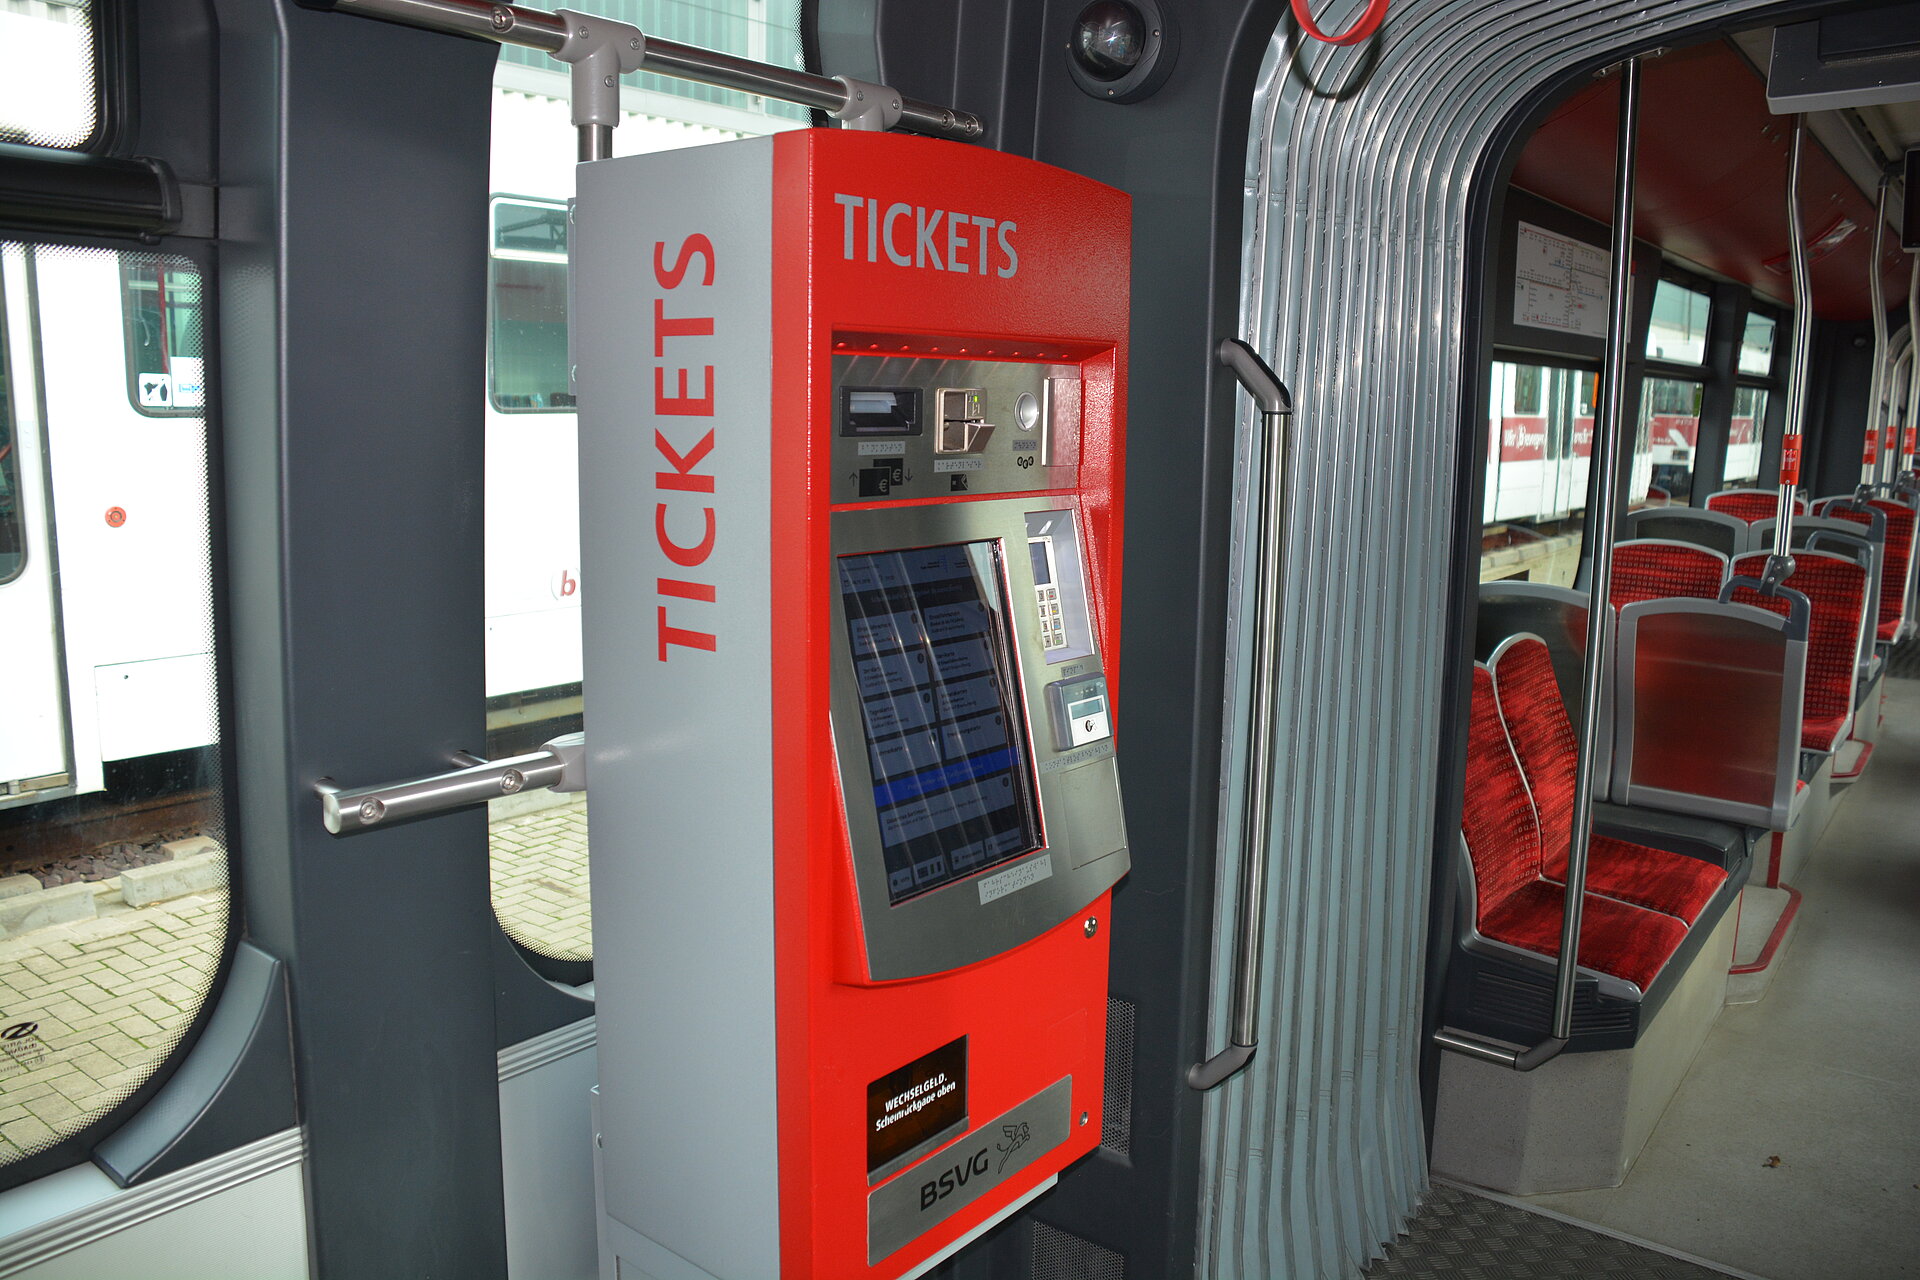 [Translate to English:] Roter Fahrscheinautomat in Straßenbahn verbaut